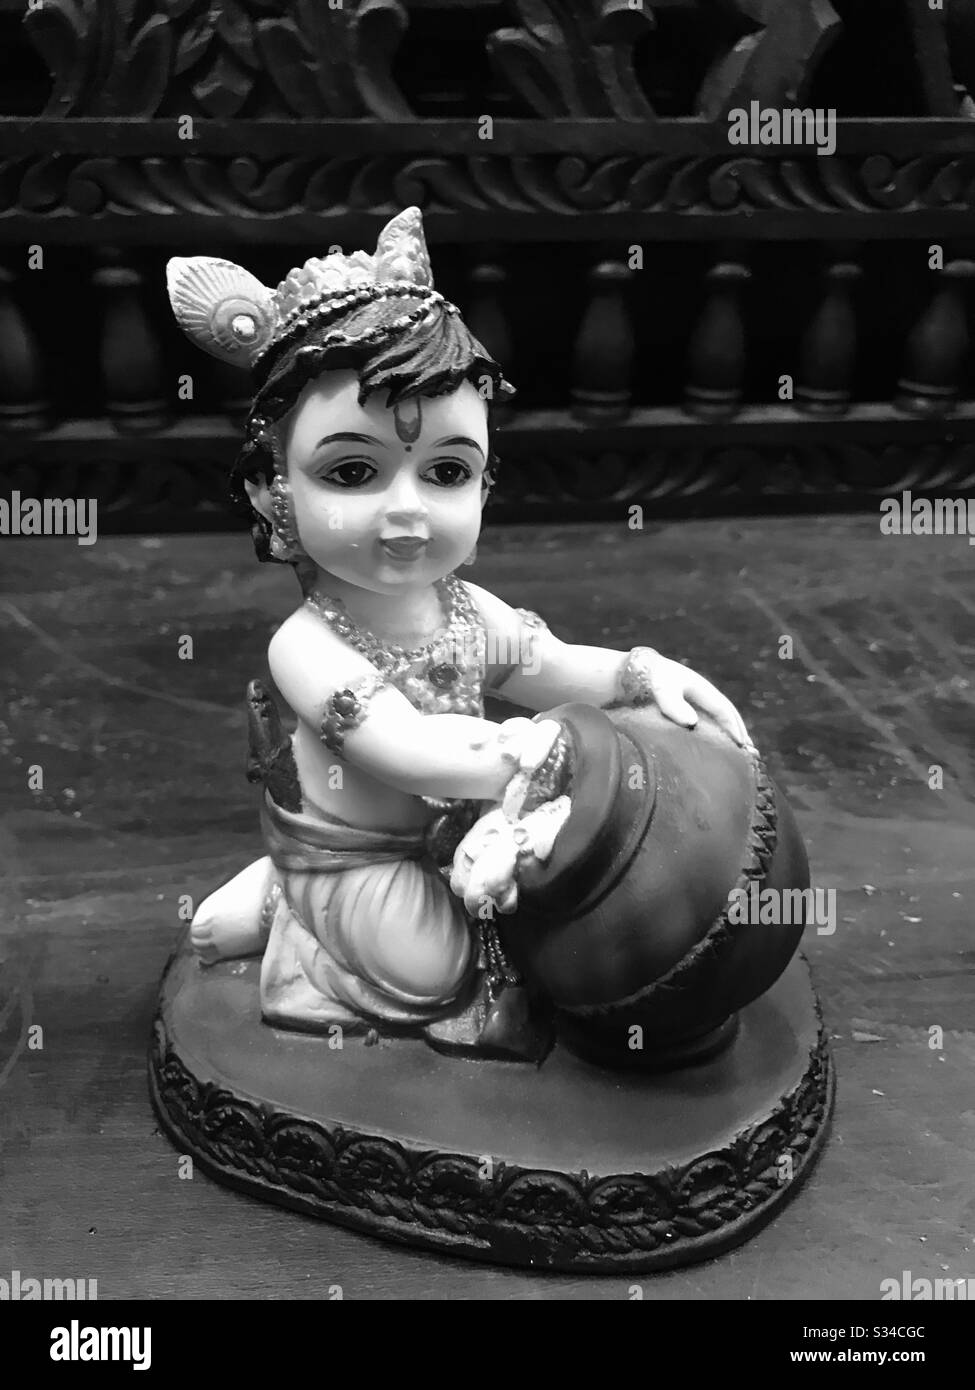 Baby Krishna eating butter- cute small wax statue found In a handicrafts shop in Little India Arcade, Singapore-Hindu God Sri Krishna-Janmashtami-Lord shri Krishnan - Soulful Love of God- Vishu- flute Stock Photo